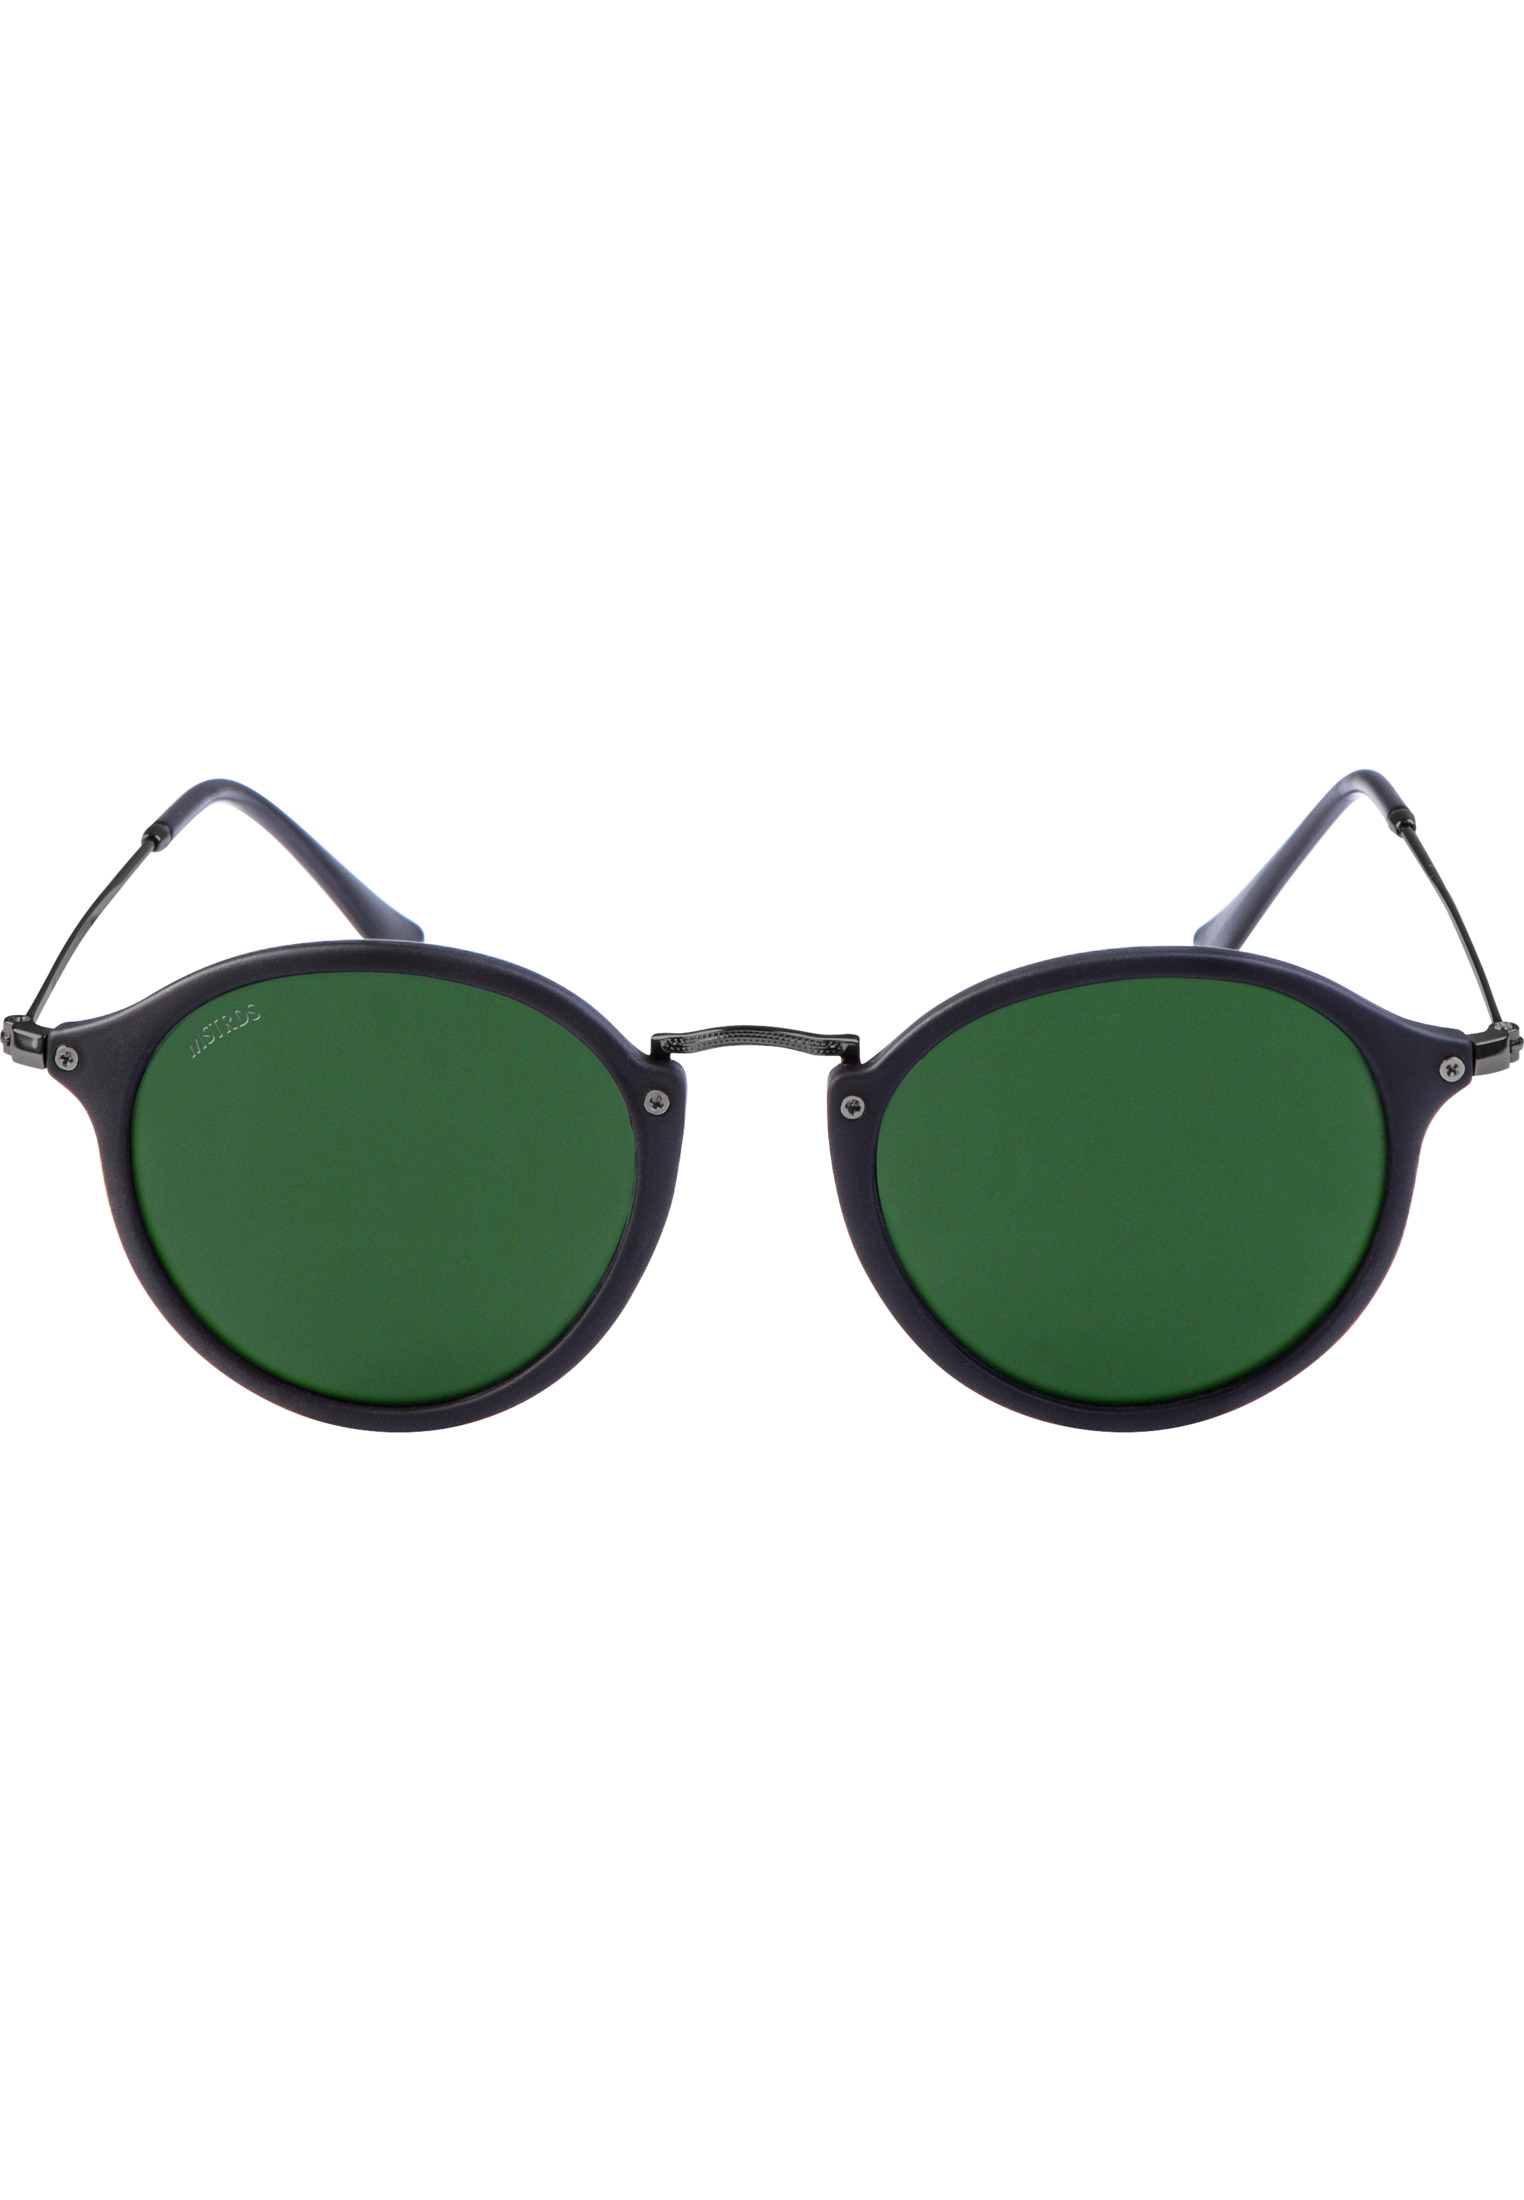 MSTRDS Herren | Sonnenbrille Ayazo Spy Sonnenbrillen | Sunglasses | Accessoires Unisex